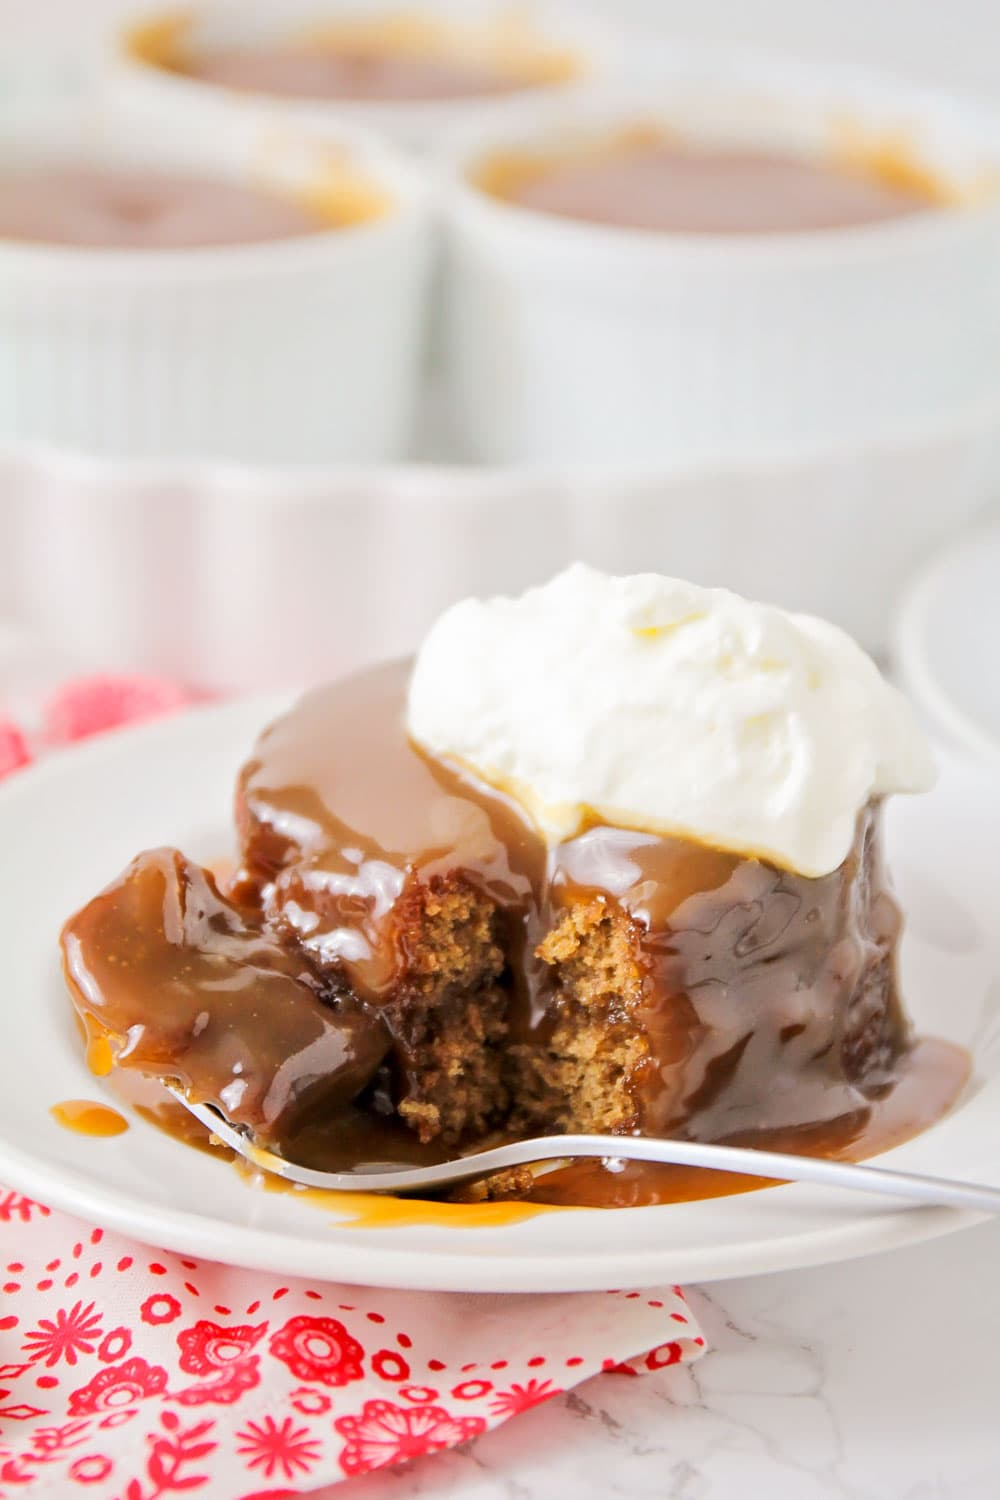 17 desserts Winter pudding cake ideas